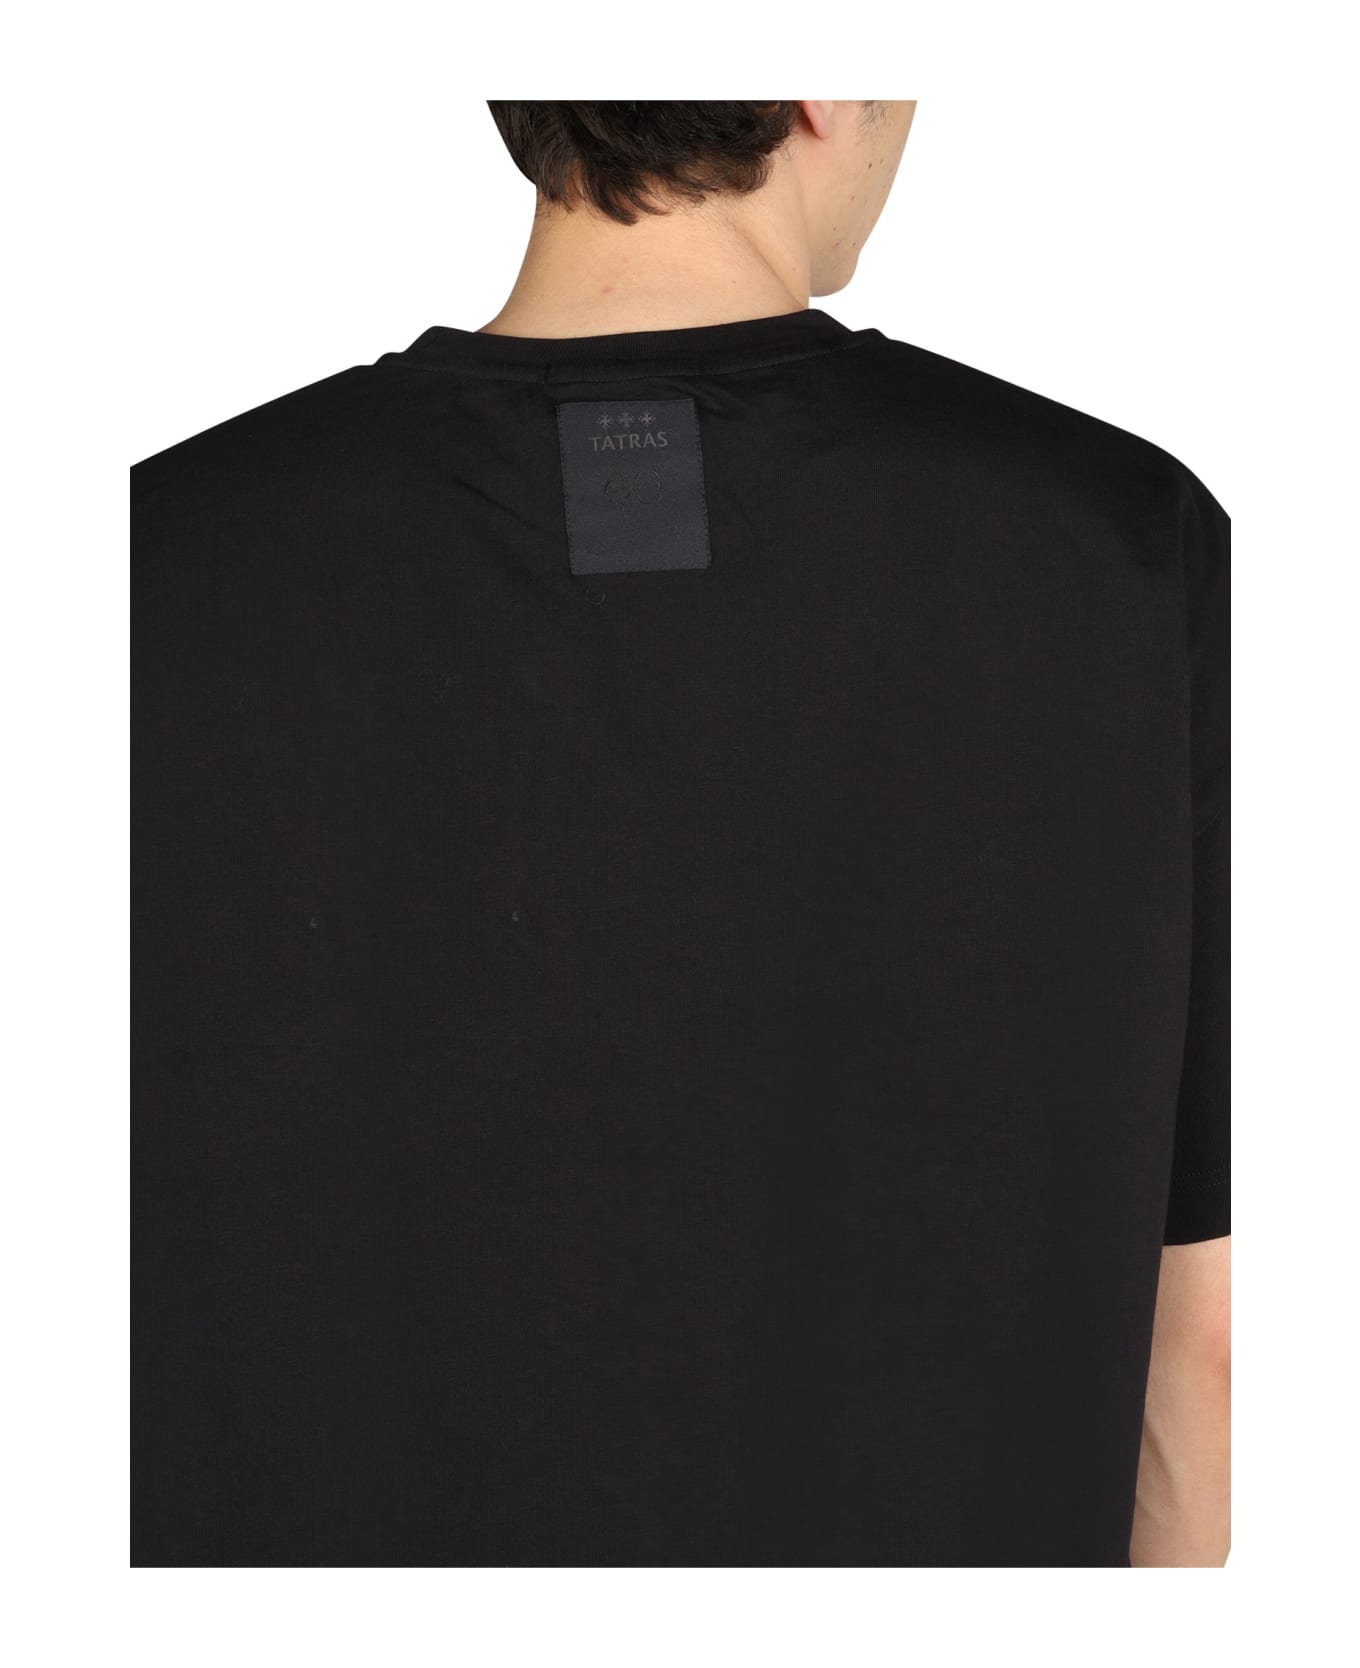 TATRAS Oversized Fit T-shirt - NERO